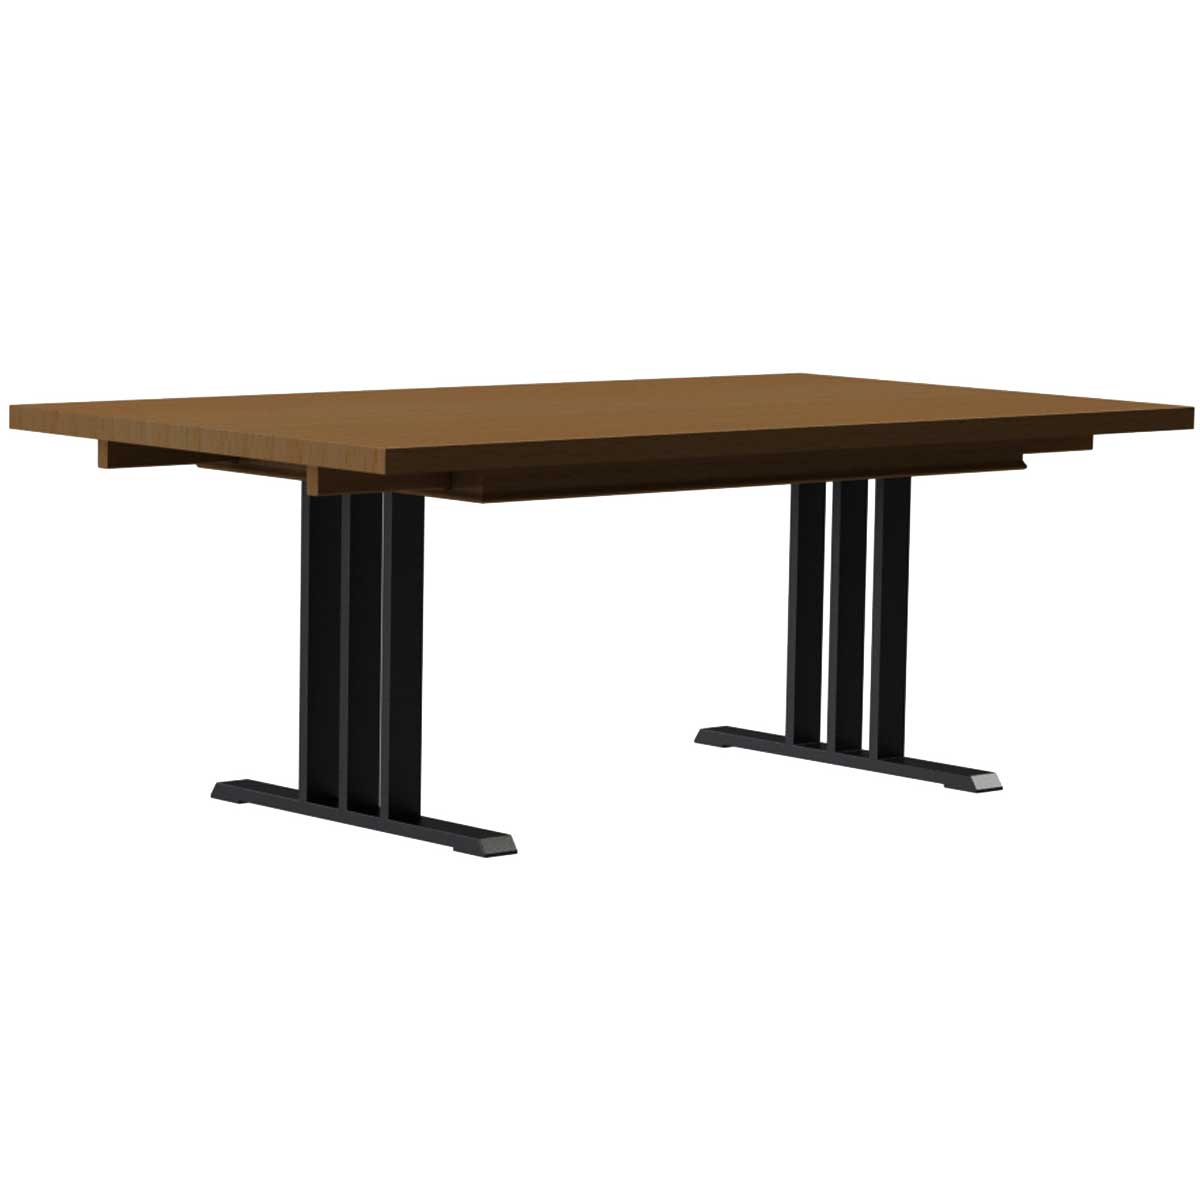 Cobalt Live Edge Table Base - snyders.furniture